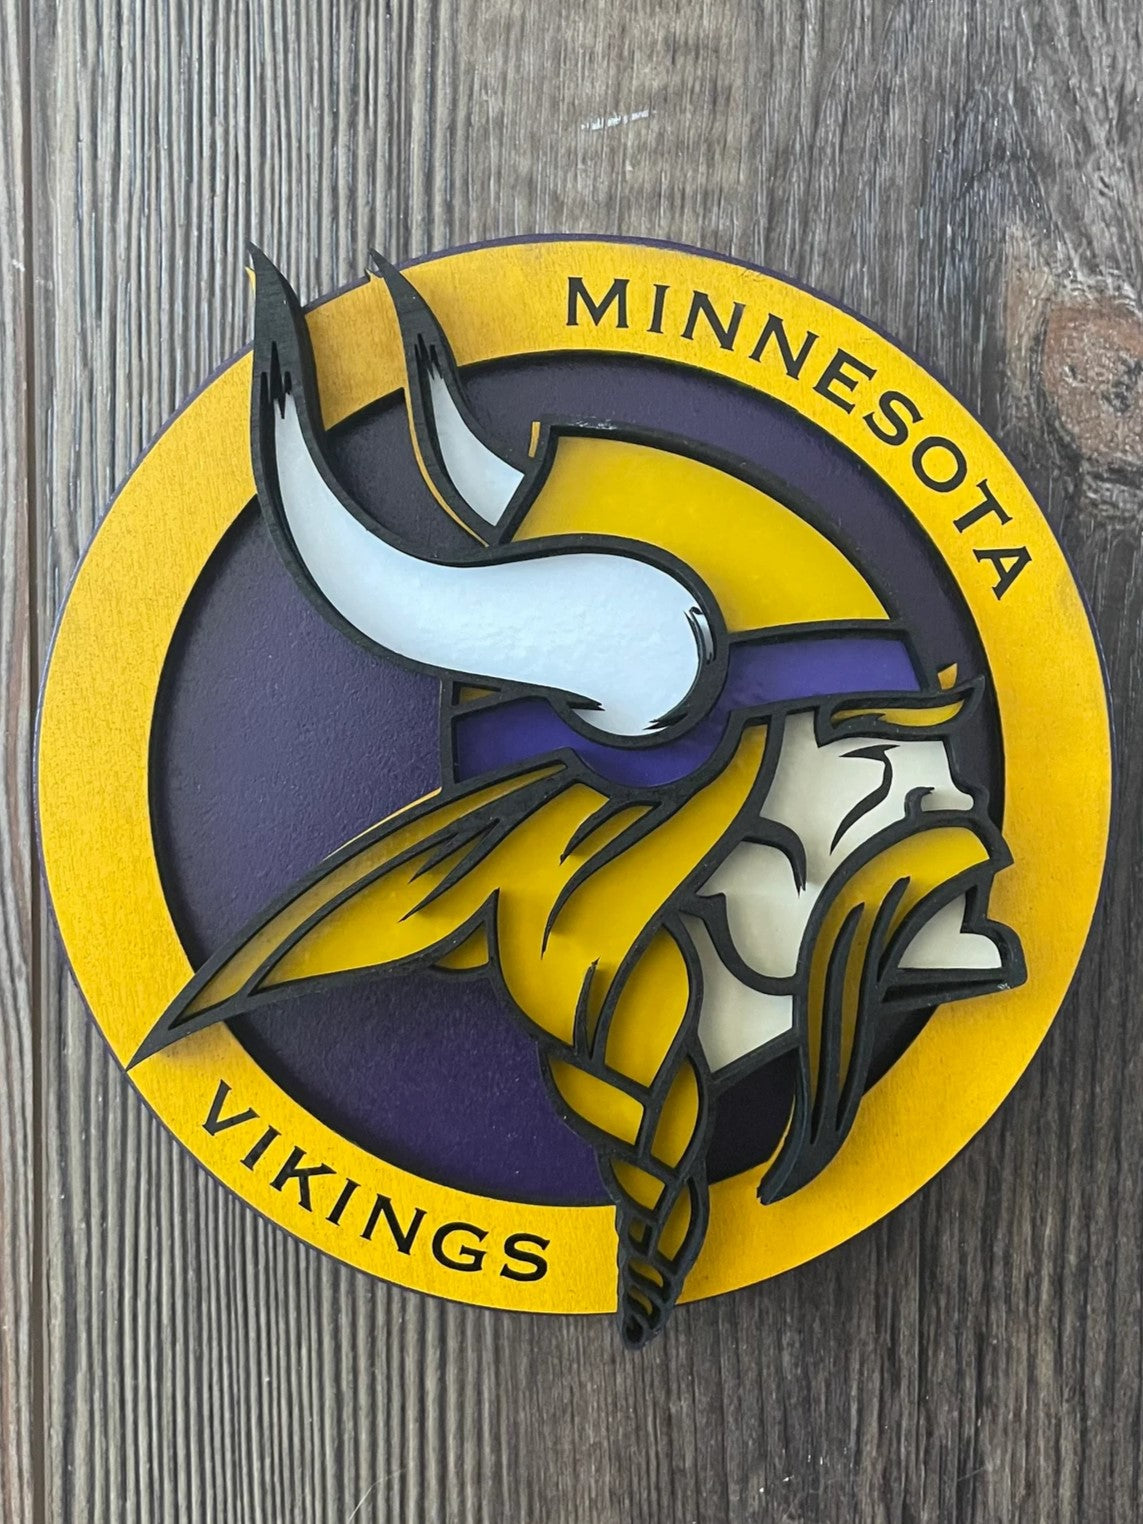 Minnesota Vikings - Layered Wood Sign